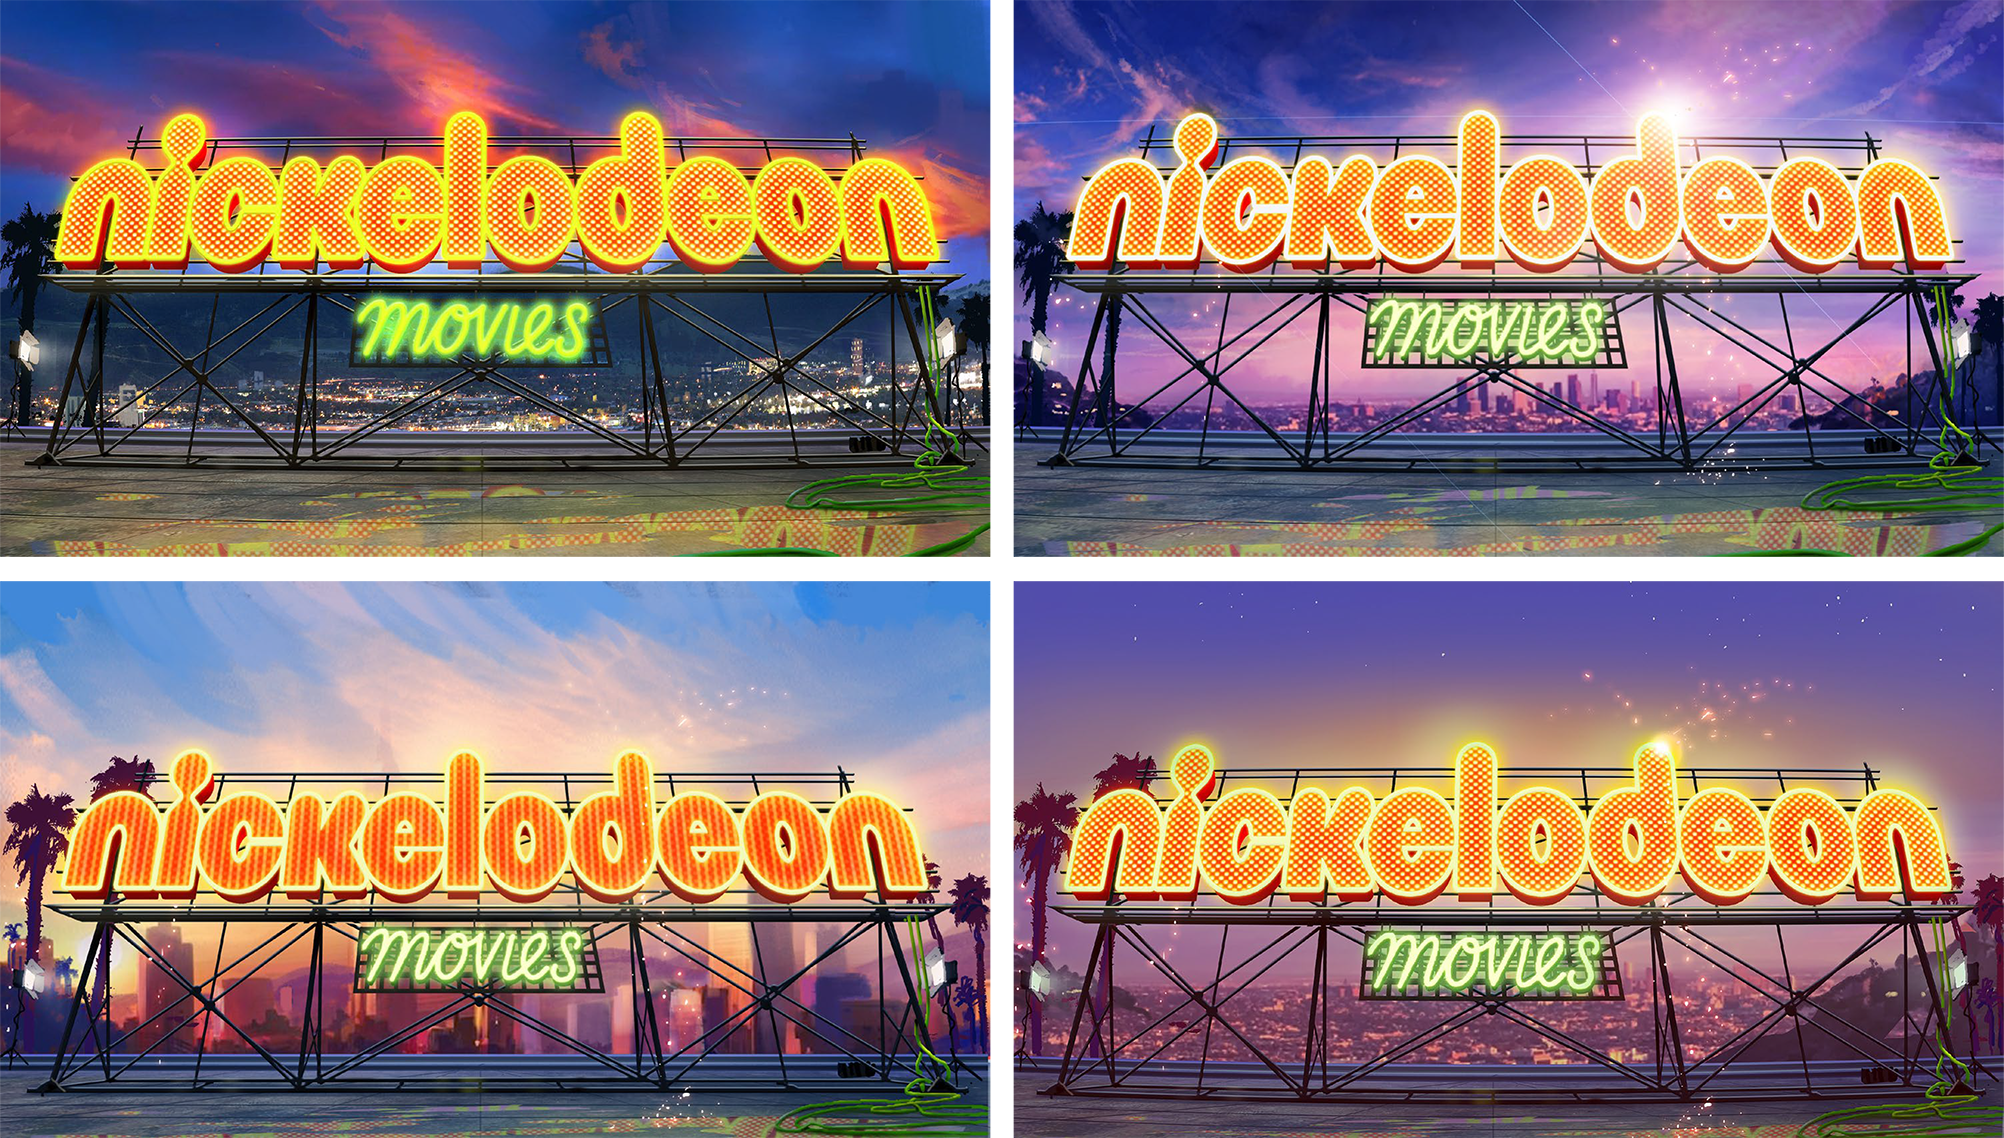 Nickelodeon Movie Intro - Nathan Love